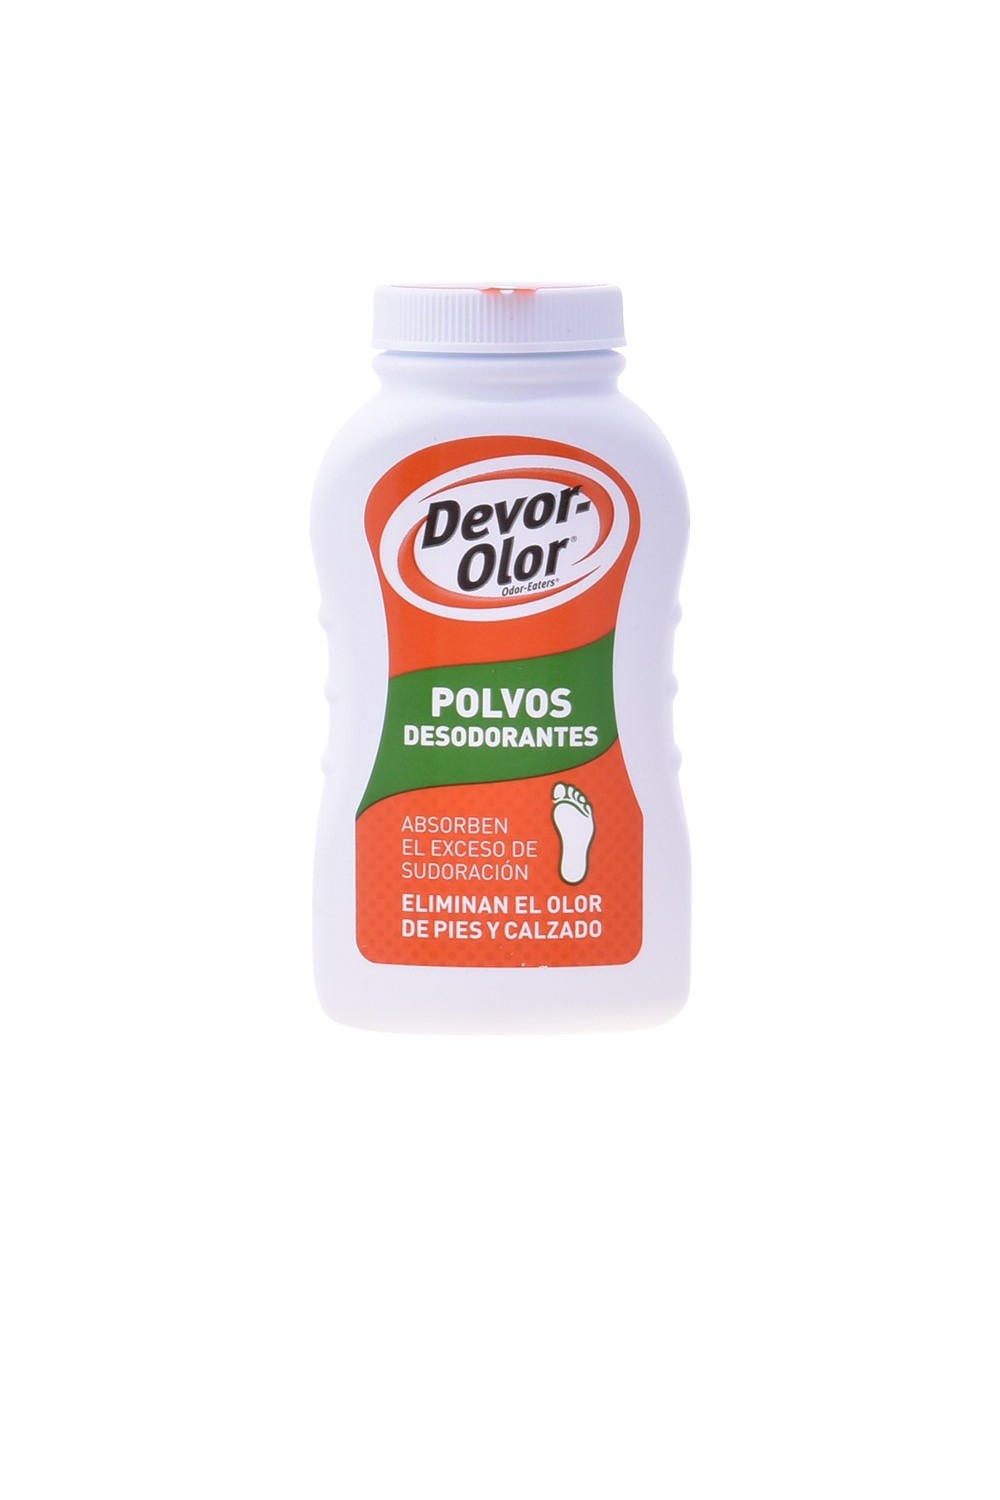 DEVOR OLOR - Devor Odor Dry & Protected Feet Deodorant Powder 100g